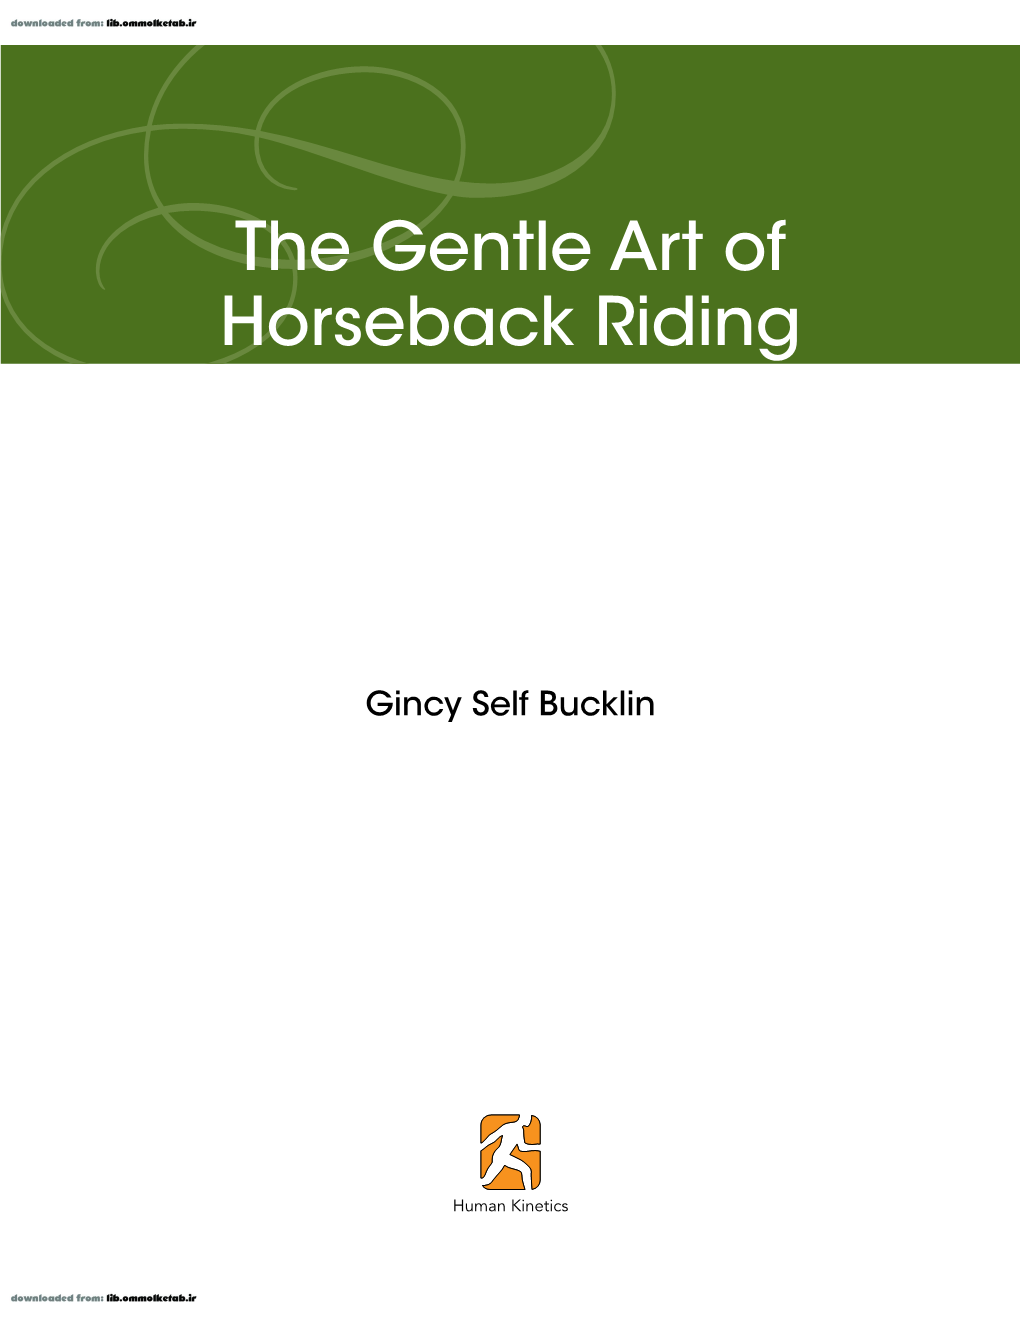 •The Gentle Art of Horseback Riding